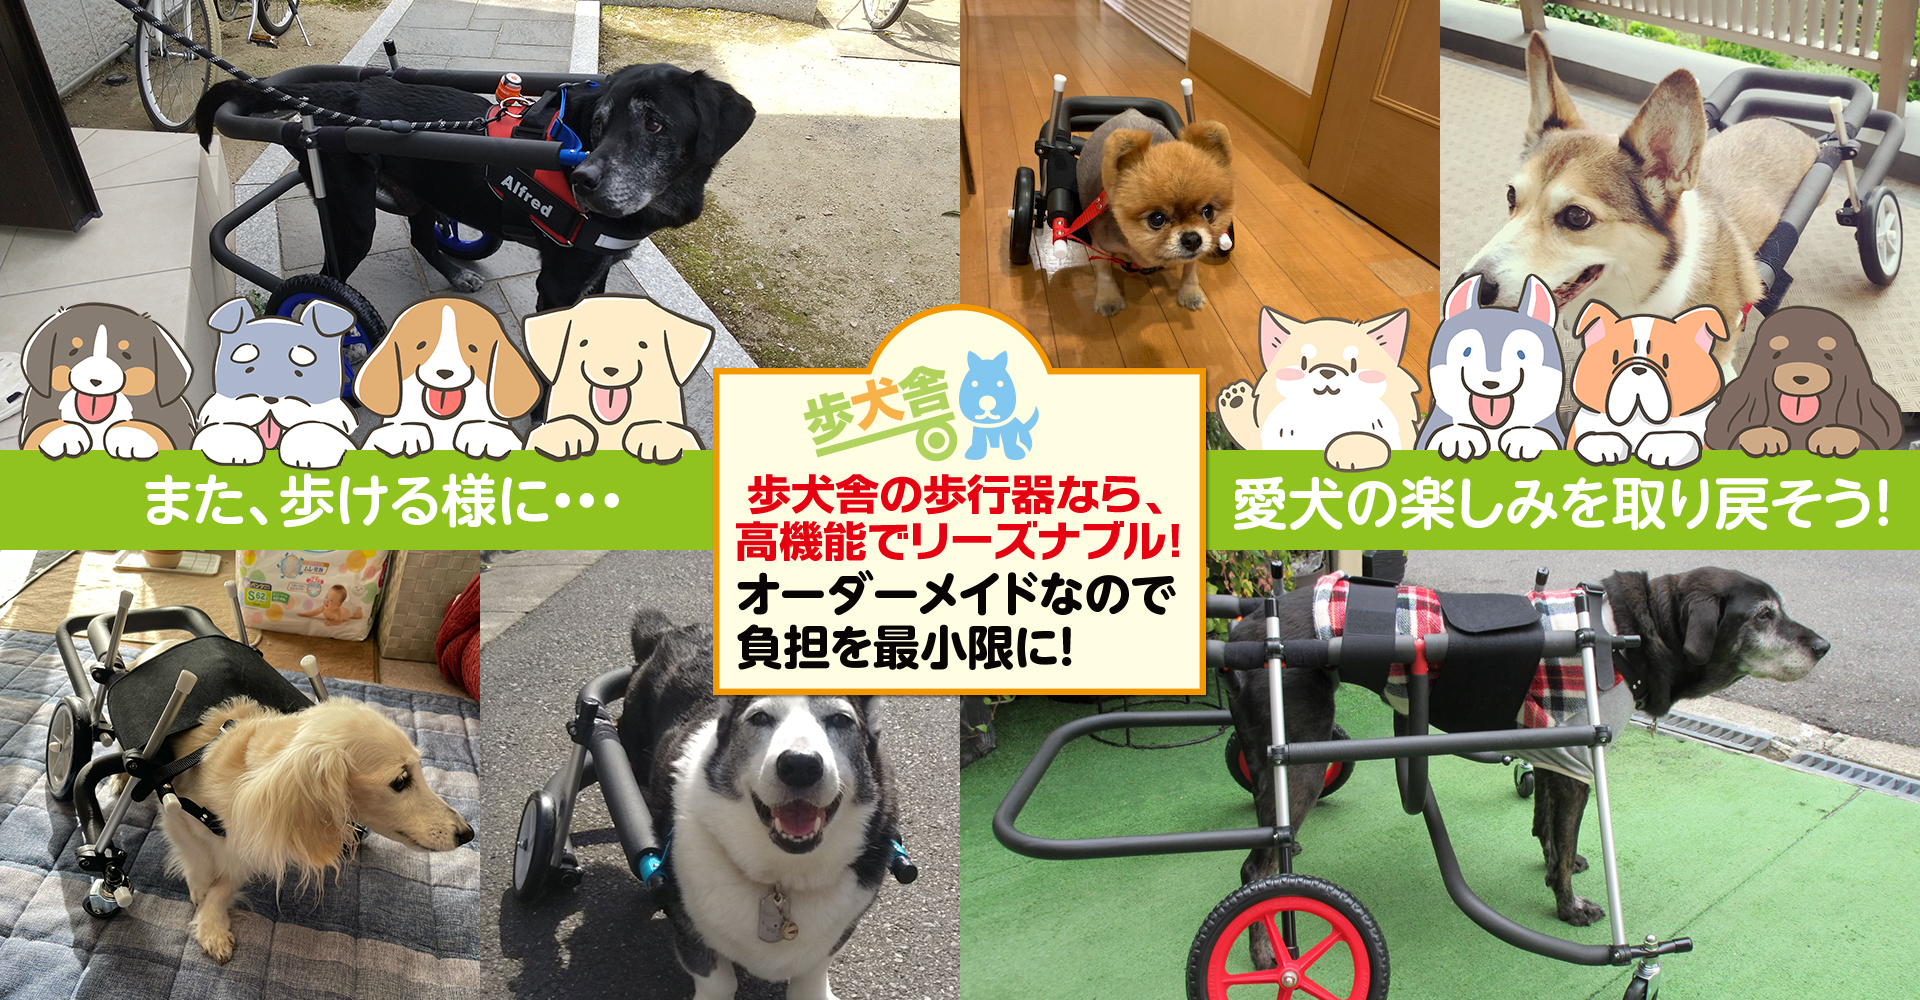 MIX犬4輪歩行器！リハビリ!食事補助!犬の歩行器！介護用!犬用車椅子!